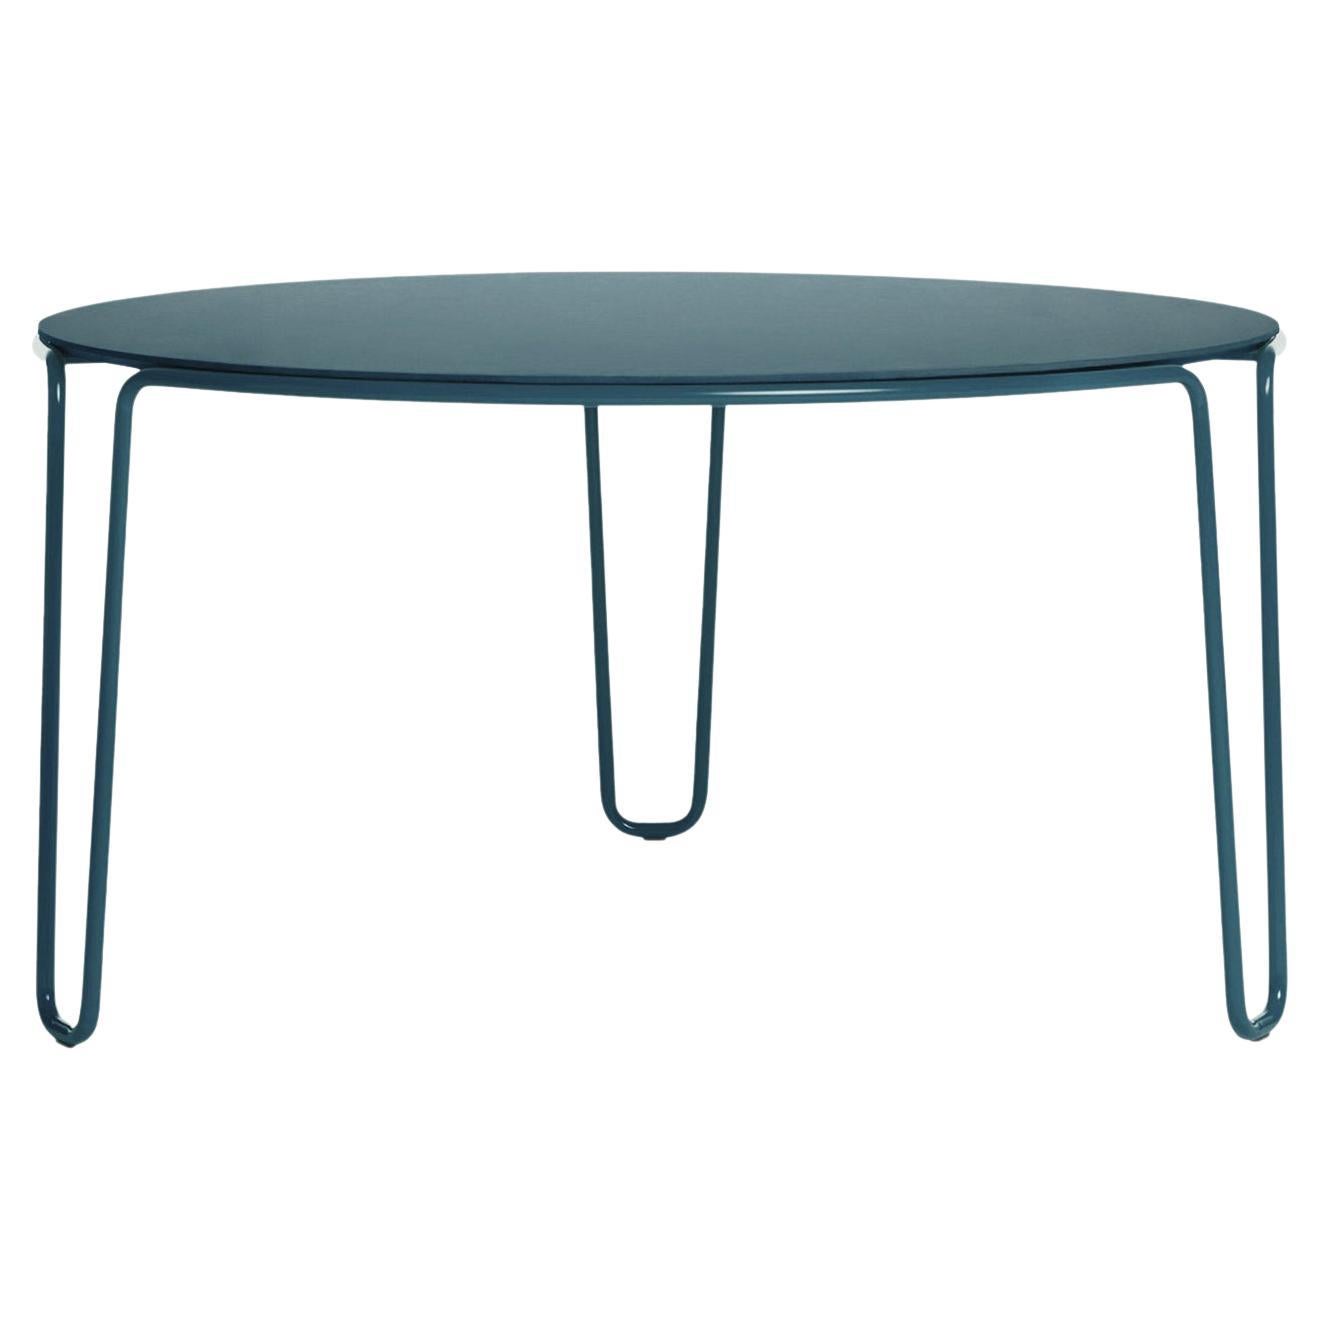 First Turquoise Table by Baldessari & Baldessari